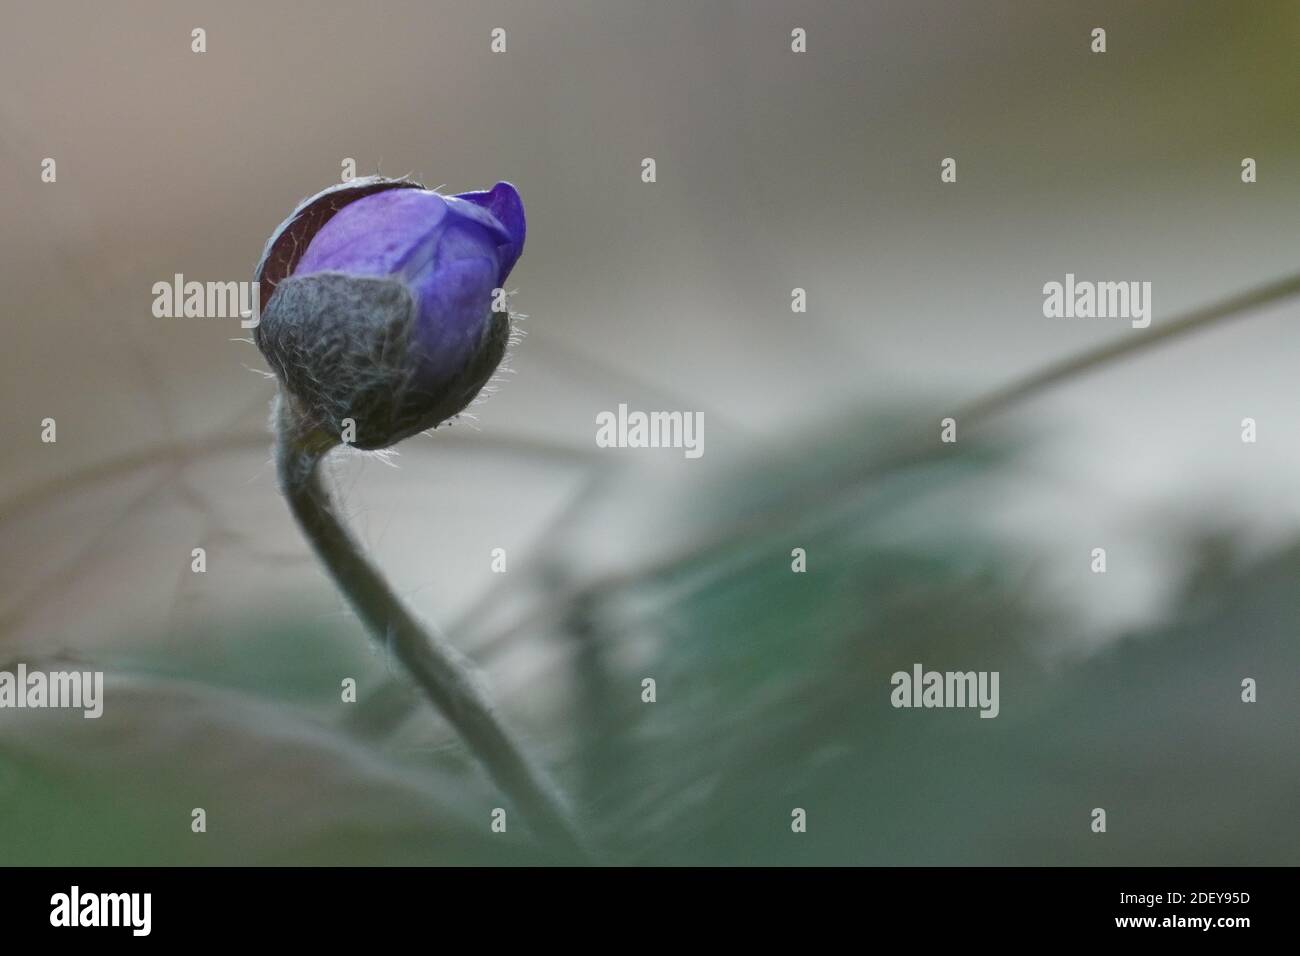 Geschlossene Blüte eines Leberblümchens, Anemone hepatica Foto Stock